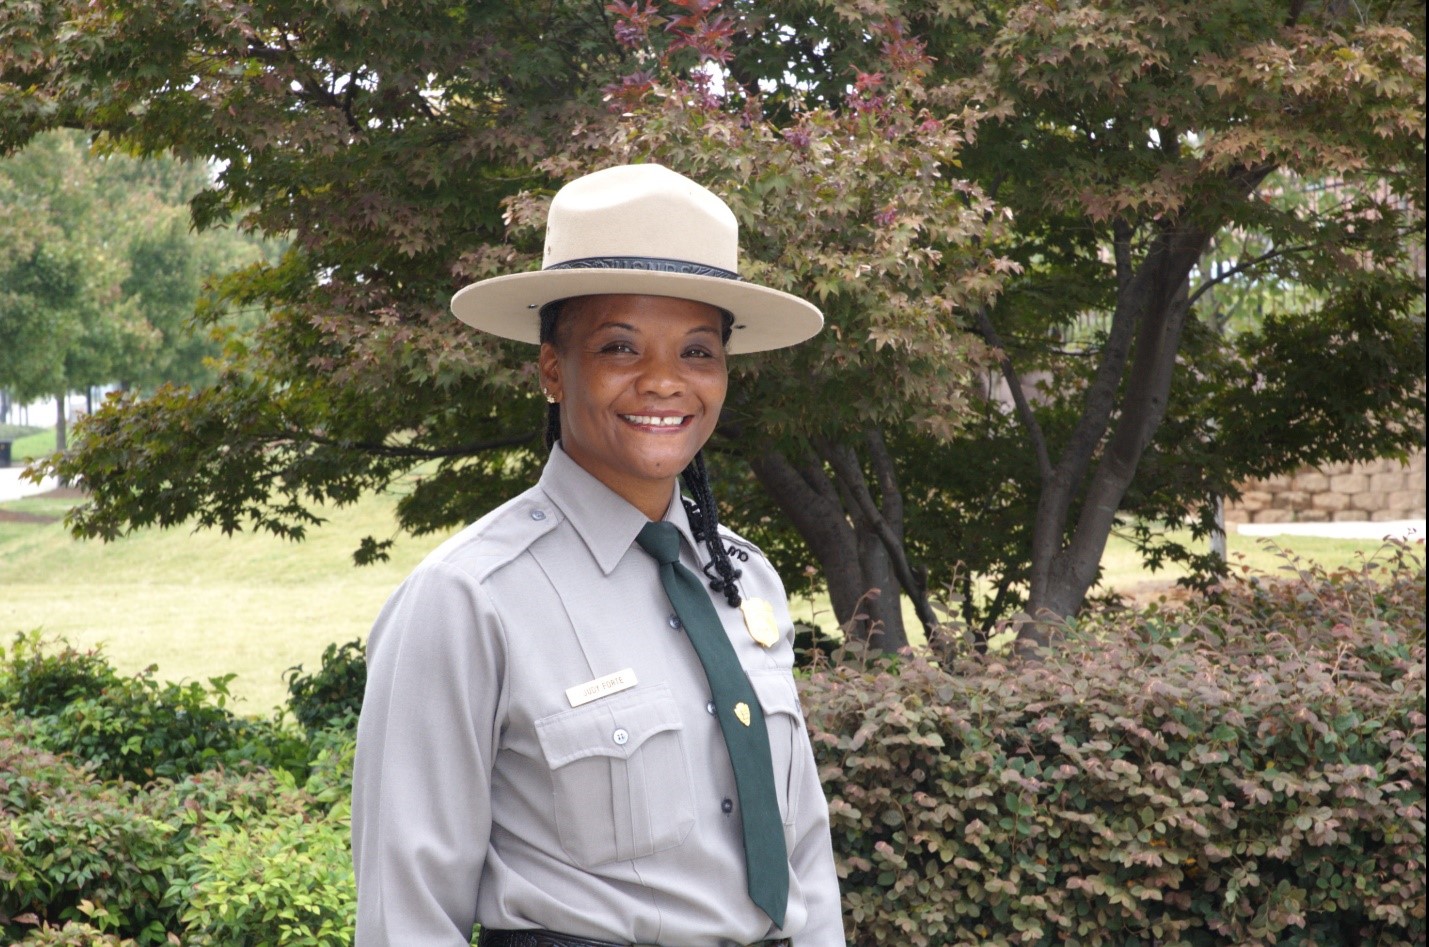 Clothes Make the Ranger: National Park Service Uniforms Serve a Vital Need 